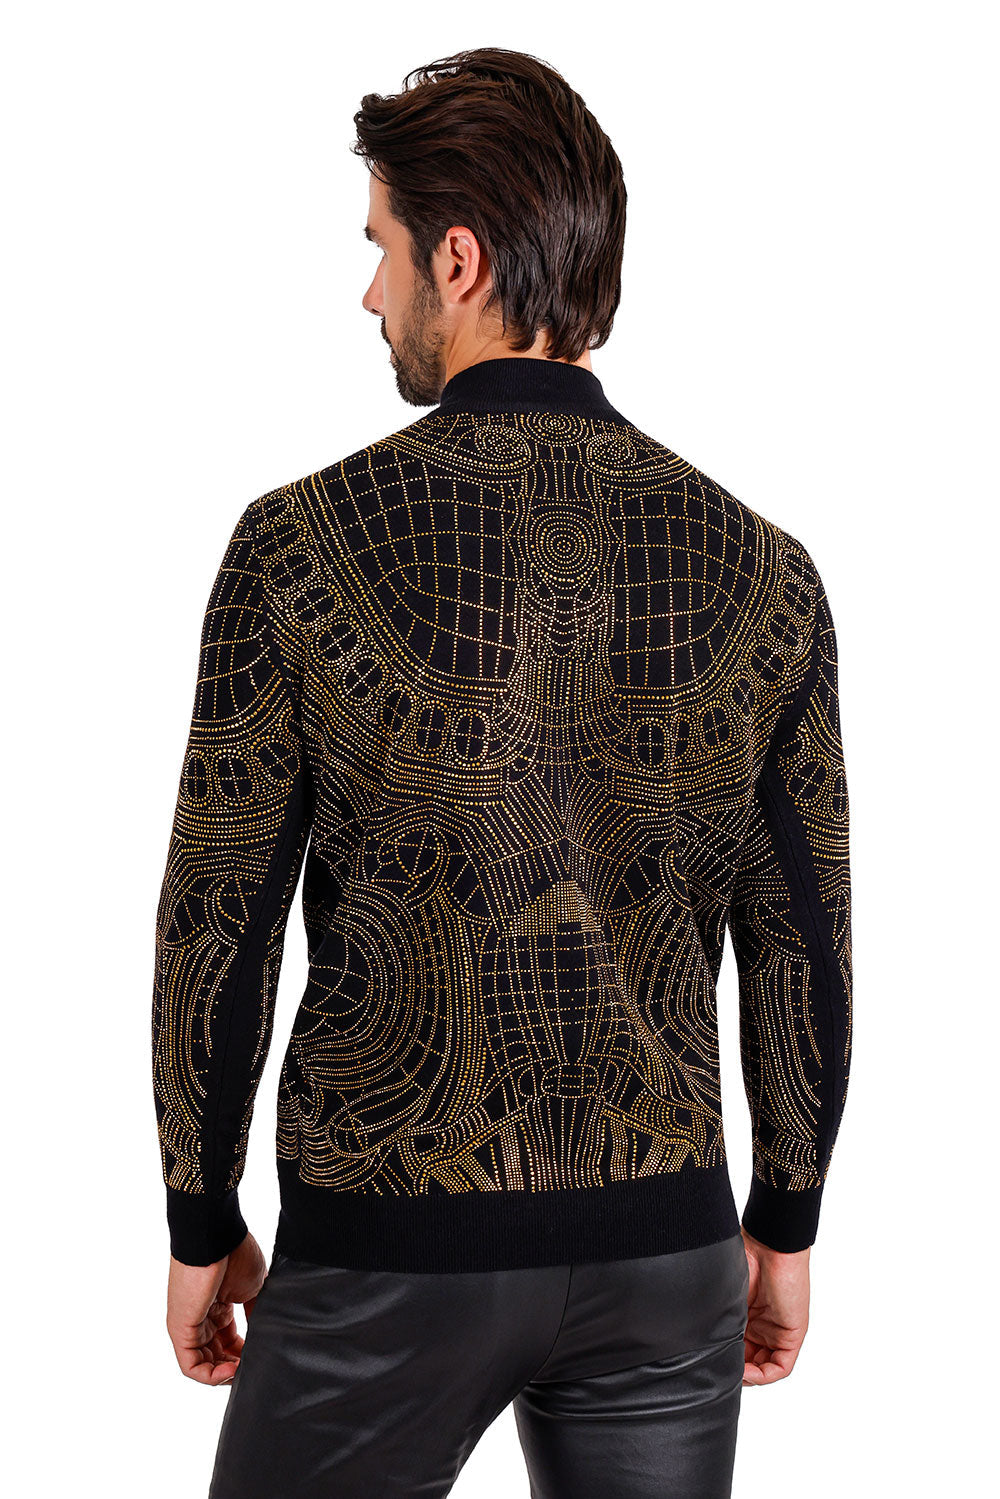 Barabas Men's Rhinestone Long Sleeve Turtleneck Sweater 3LS2107 Gold